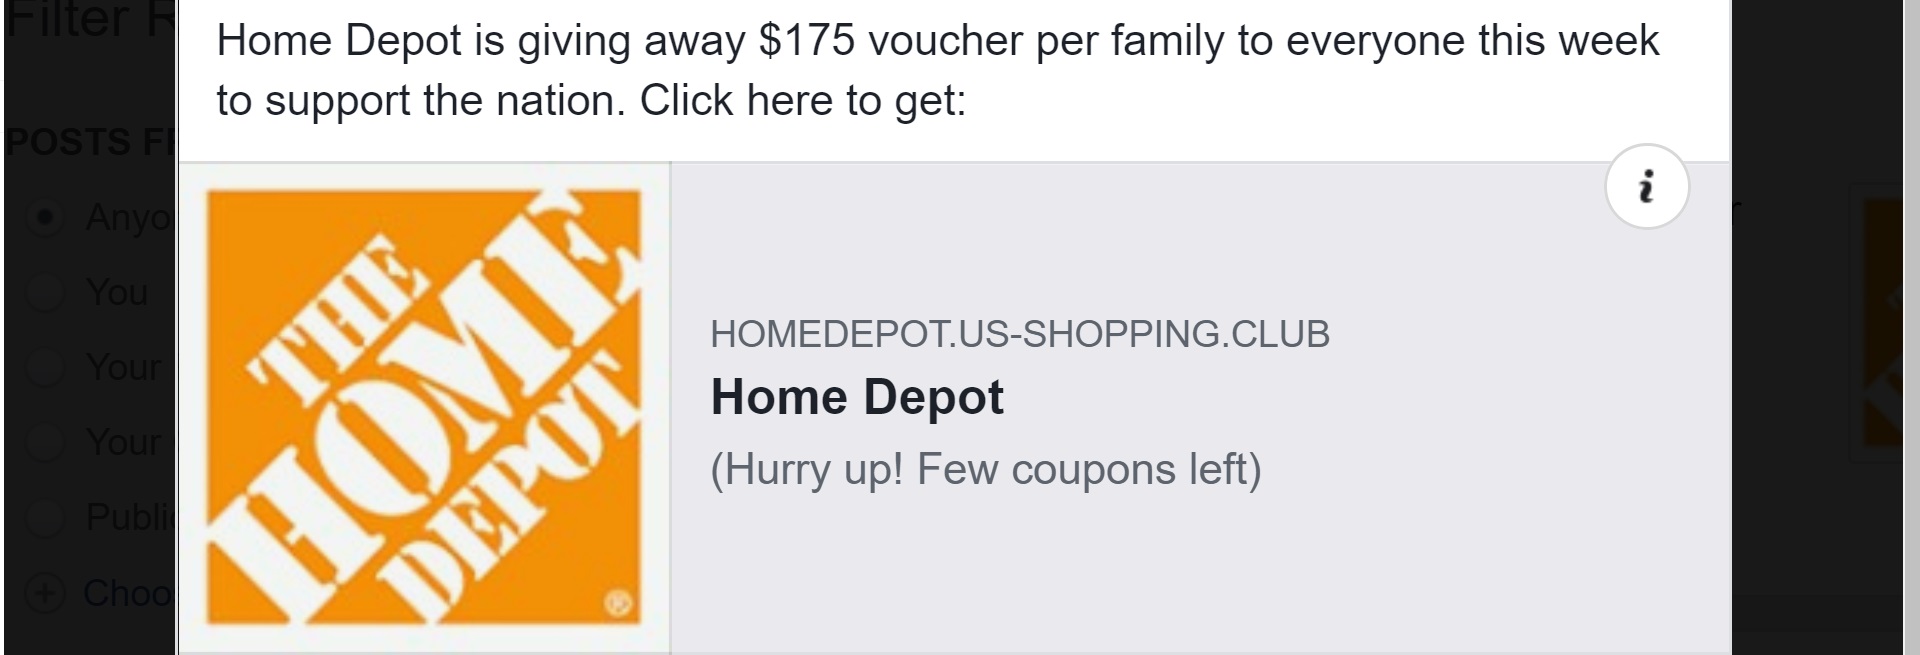 Home Depot Voucher $175 Scam Giveaway